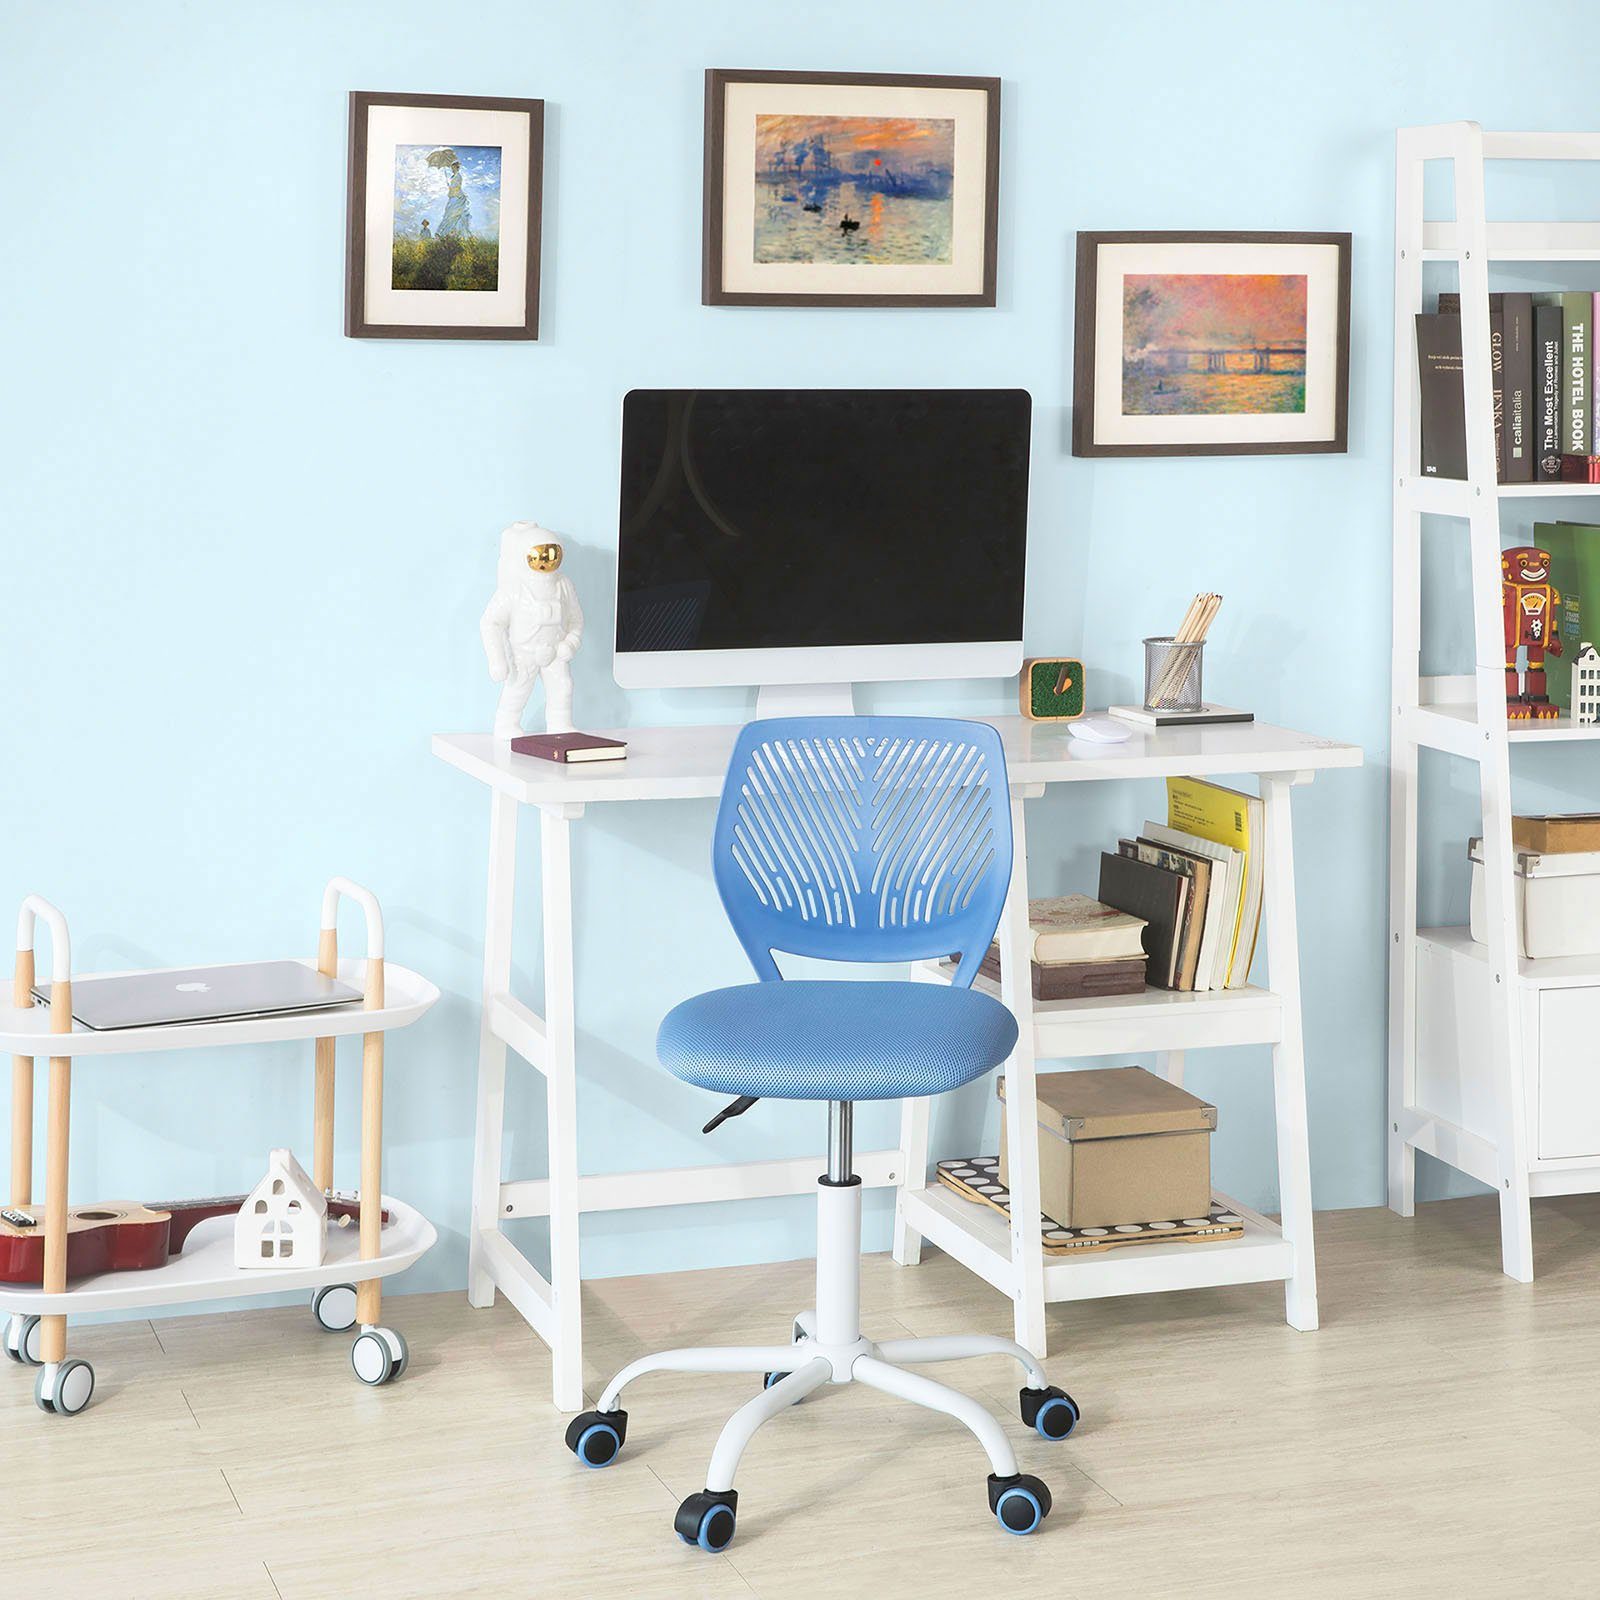 höhenverstellbar SoBuy blau Bürostuhl FST64, Jugenddrehstuhl Rücklehne Drehstuhl Schreibtischstuhl mit